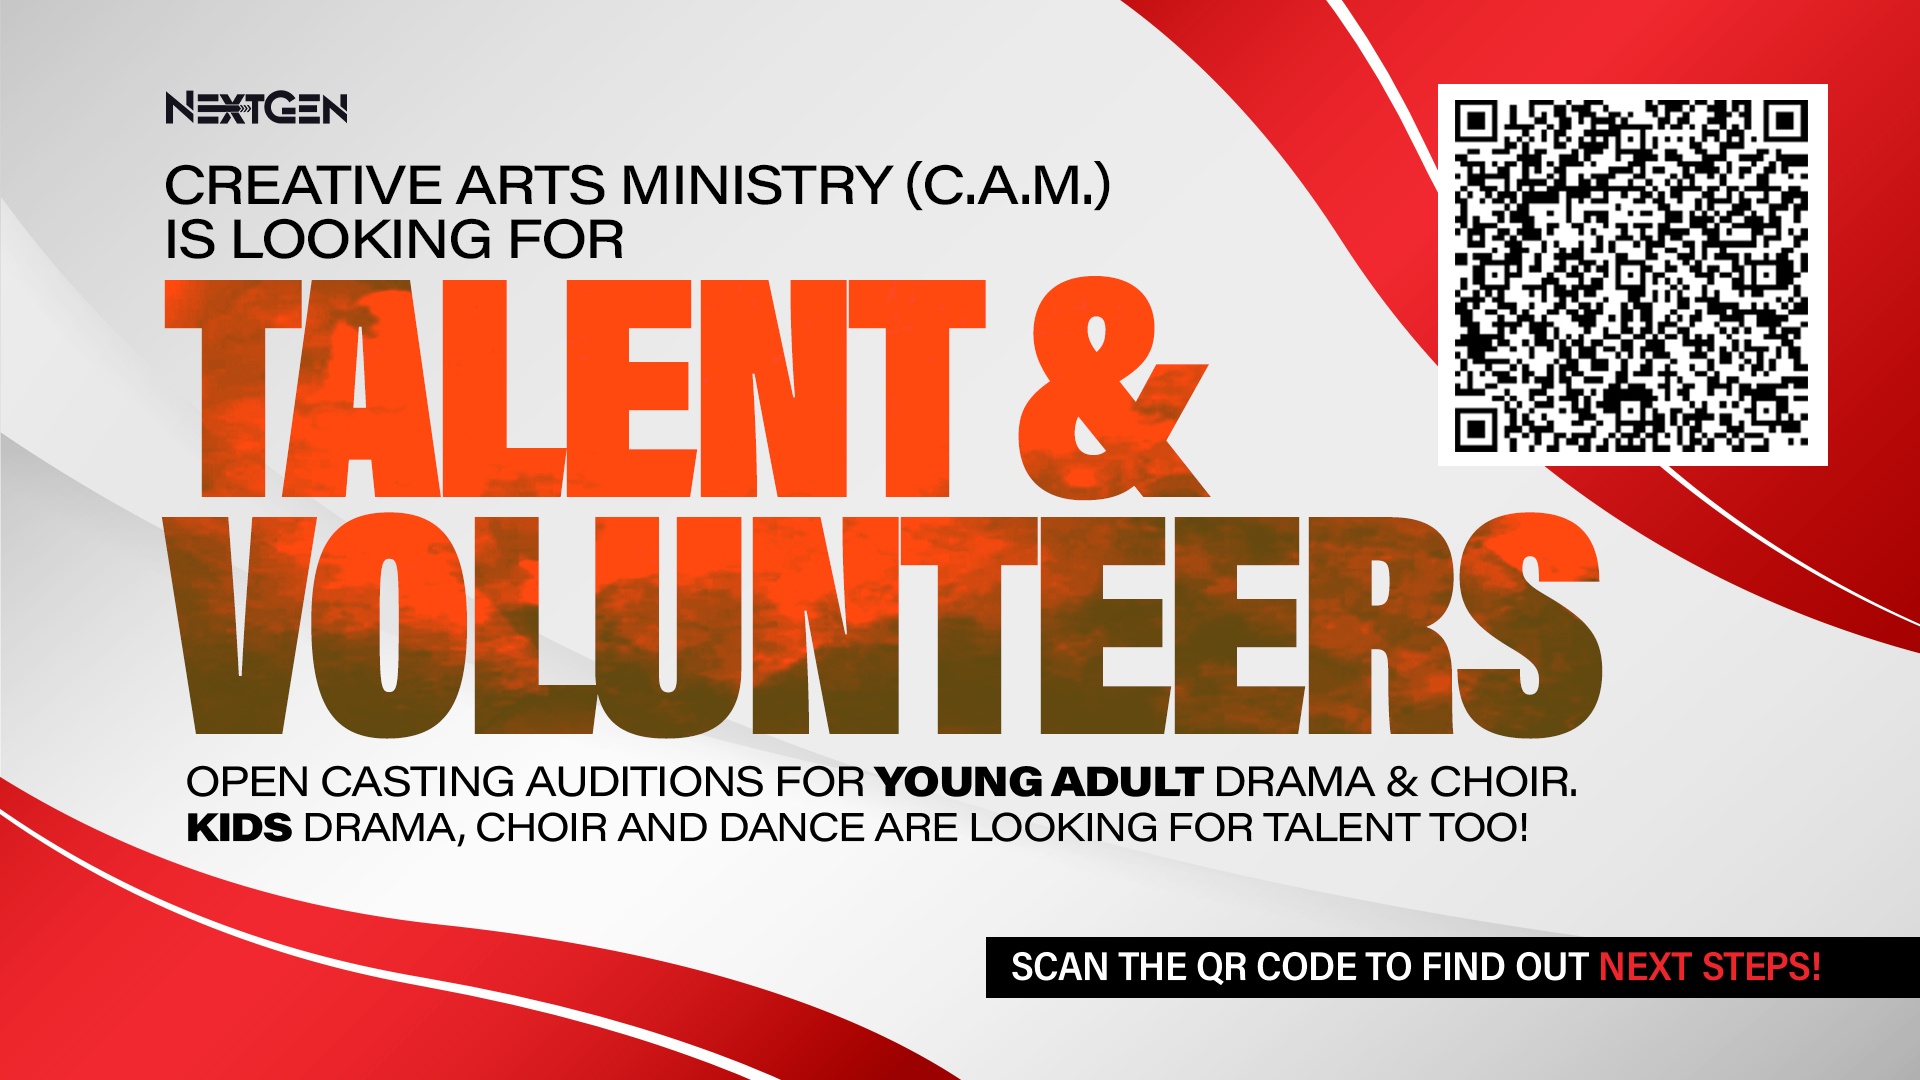 Creative arts ministry seeks talent and volunteers